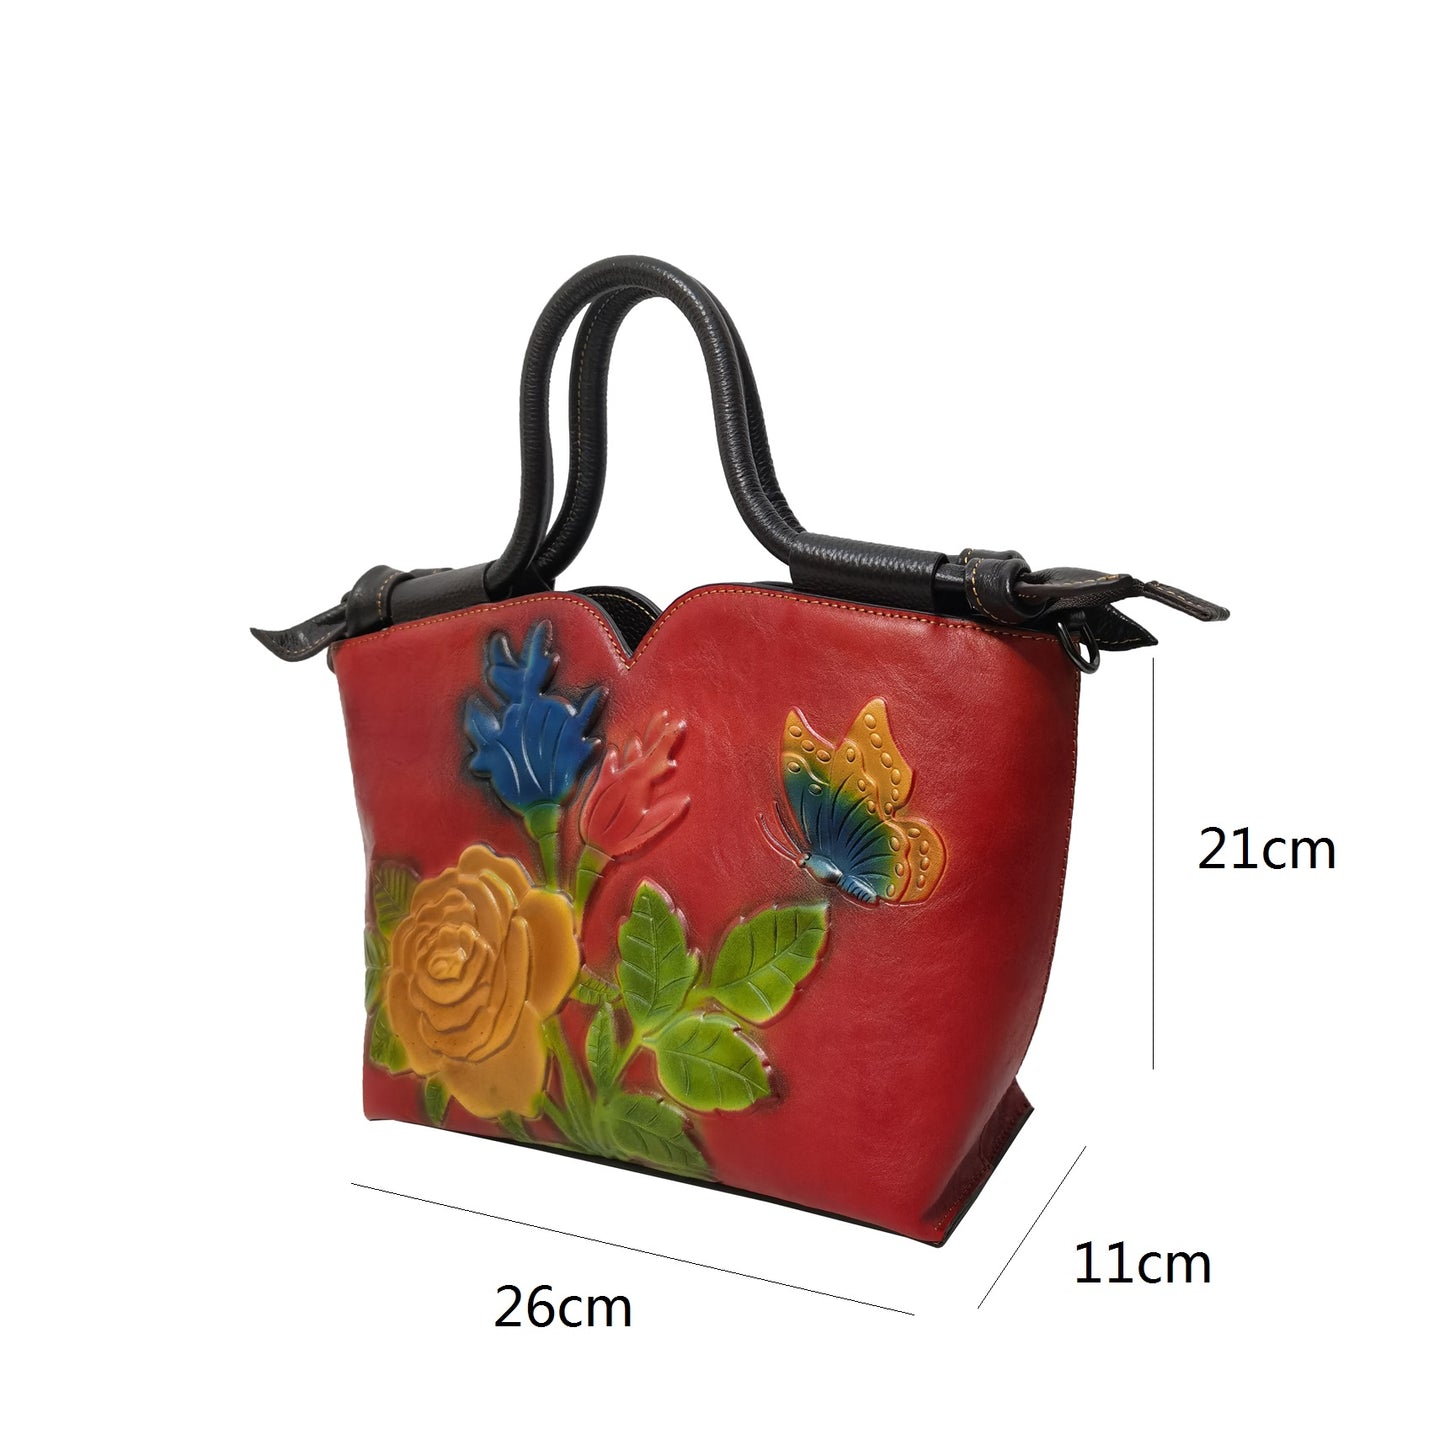 Women's embossed genuine cowhide leather handbag Ellipse design